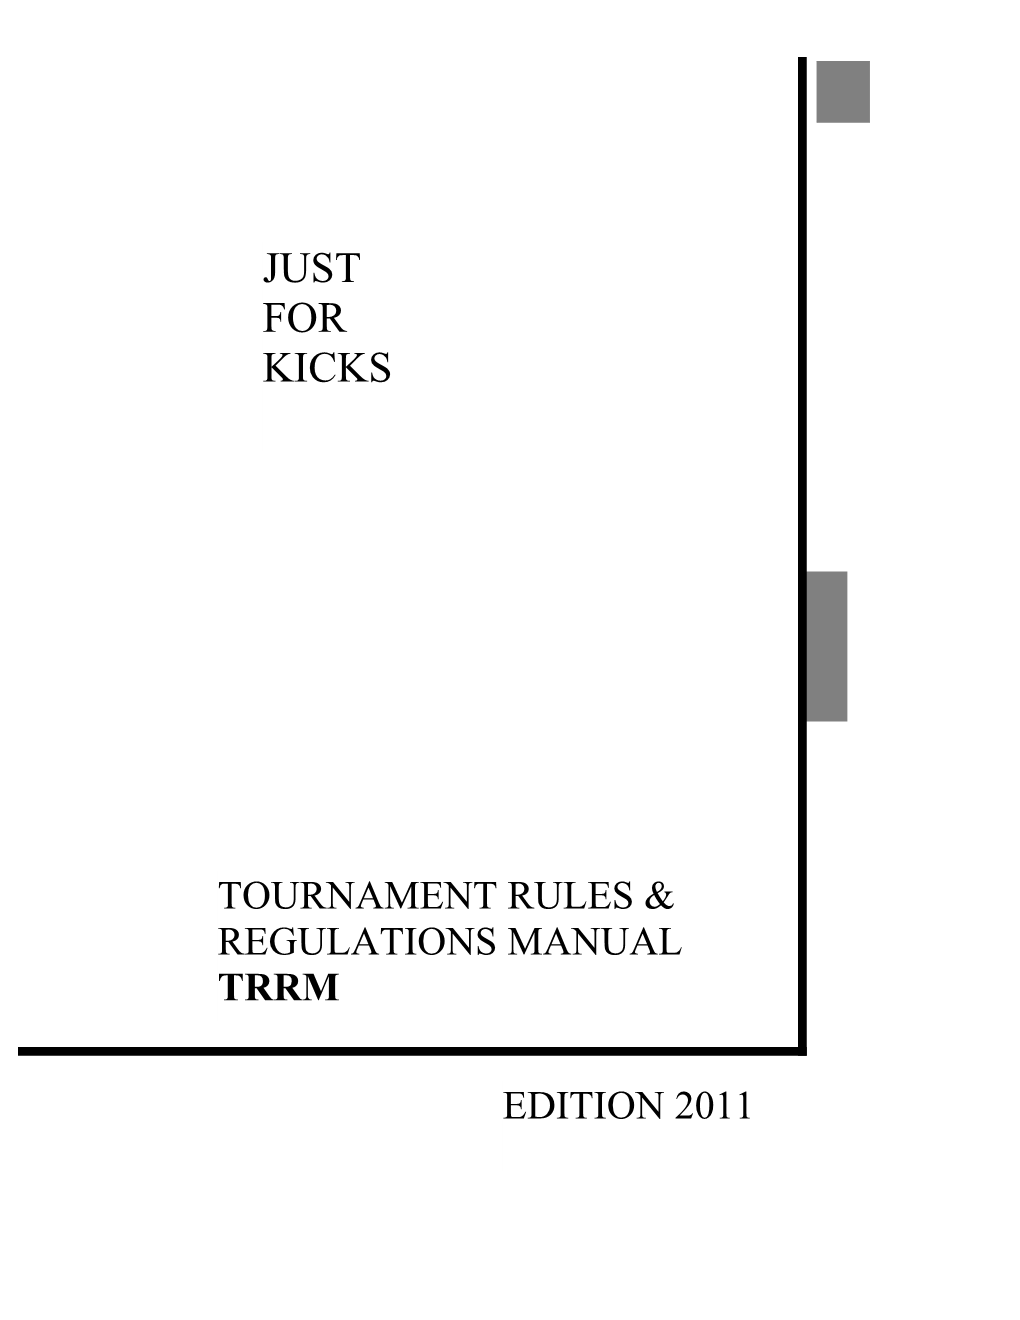 Tournament Rules & Regulations Manual